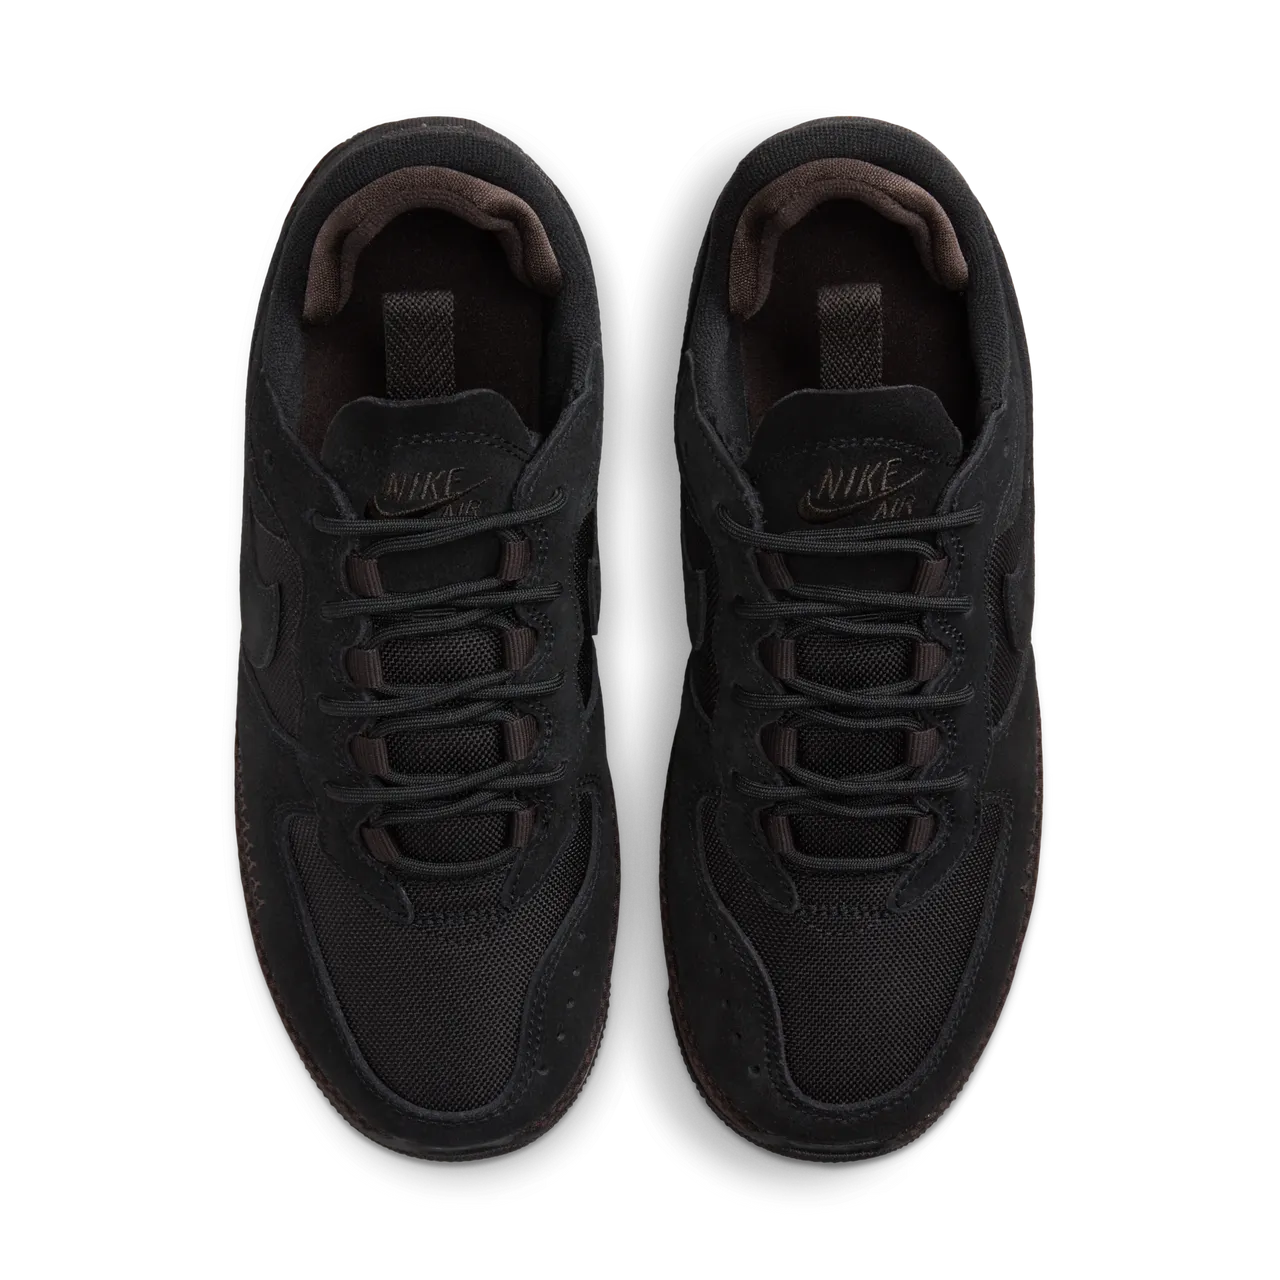 Nike Air Force 1 Wild Women's Shoes - Black